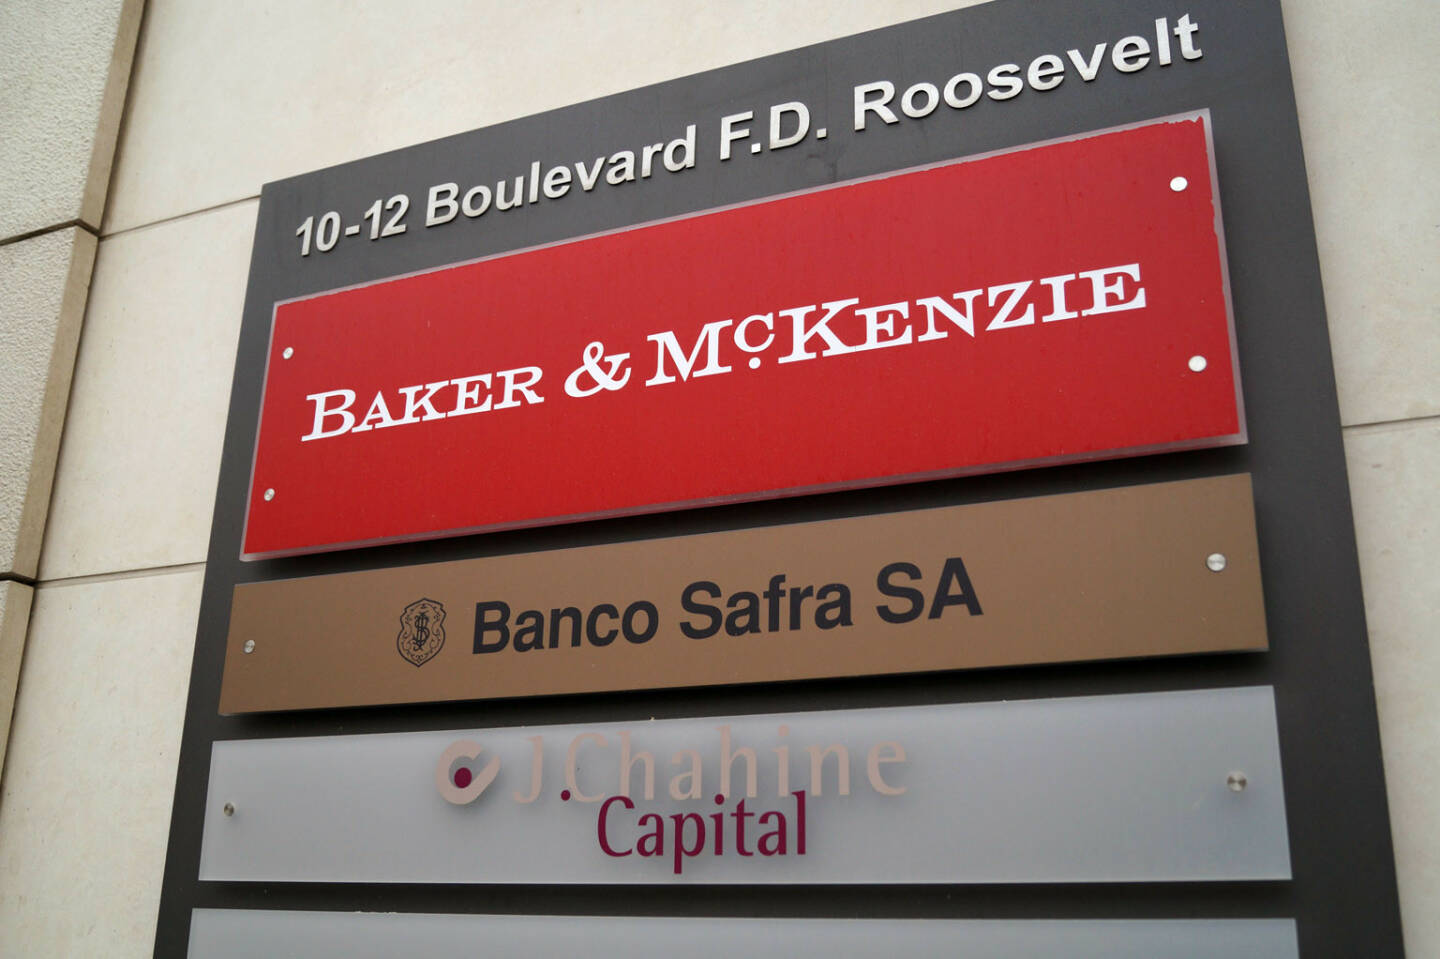 Banker & McKenzie